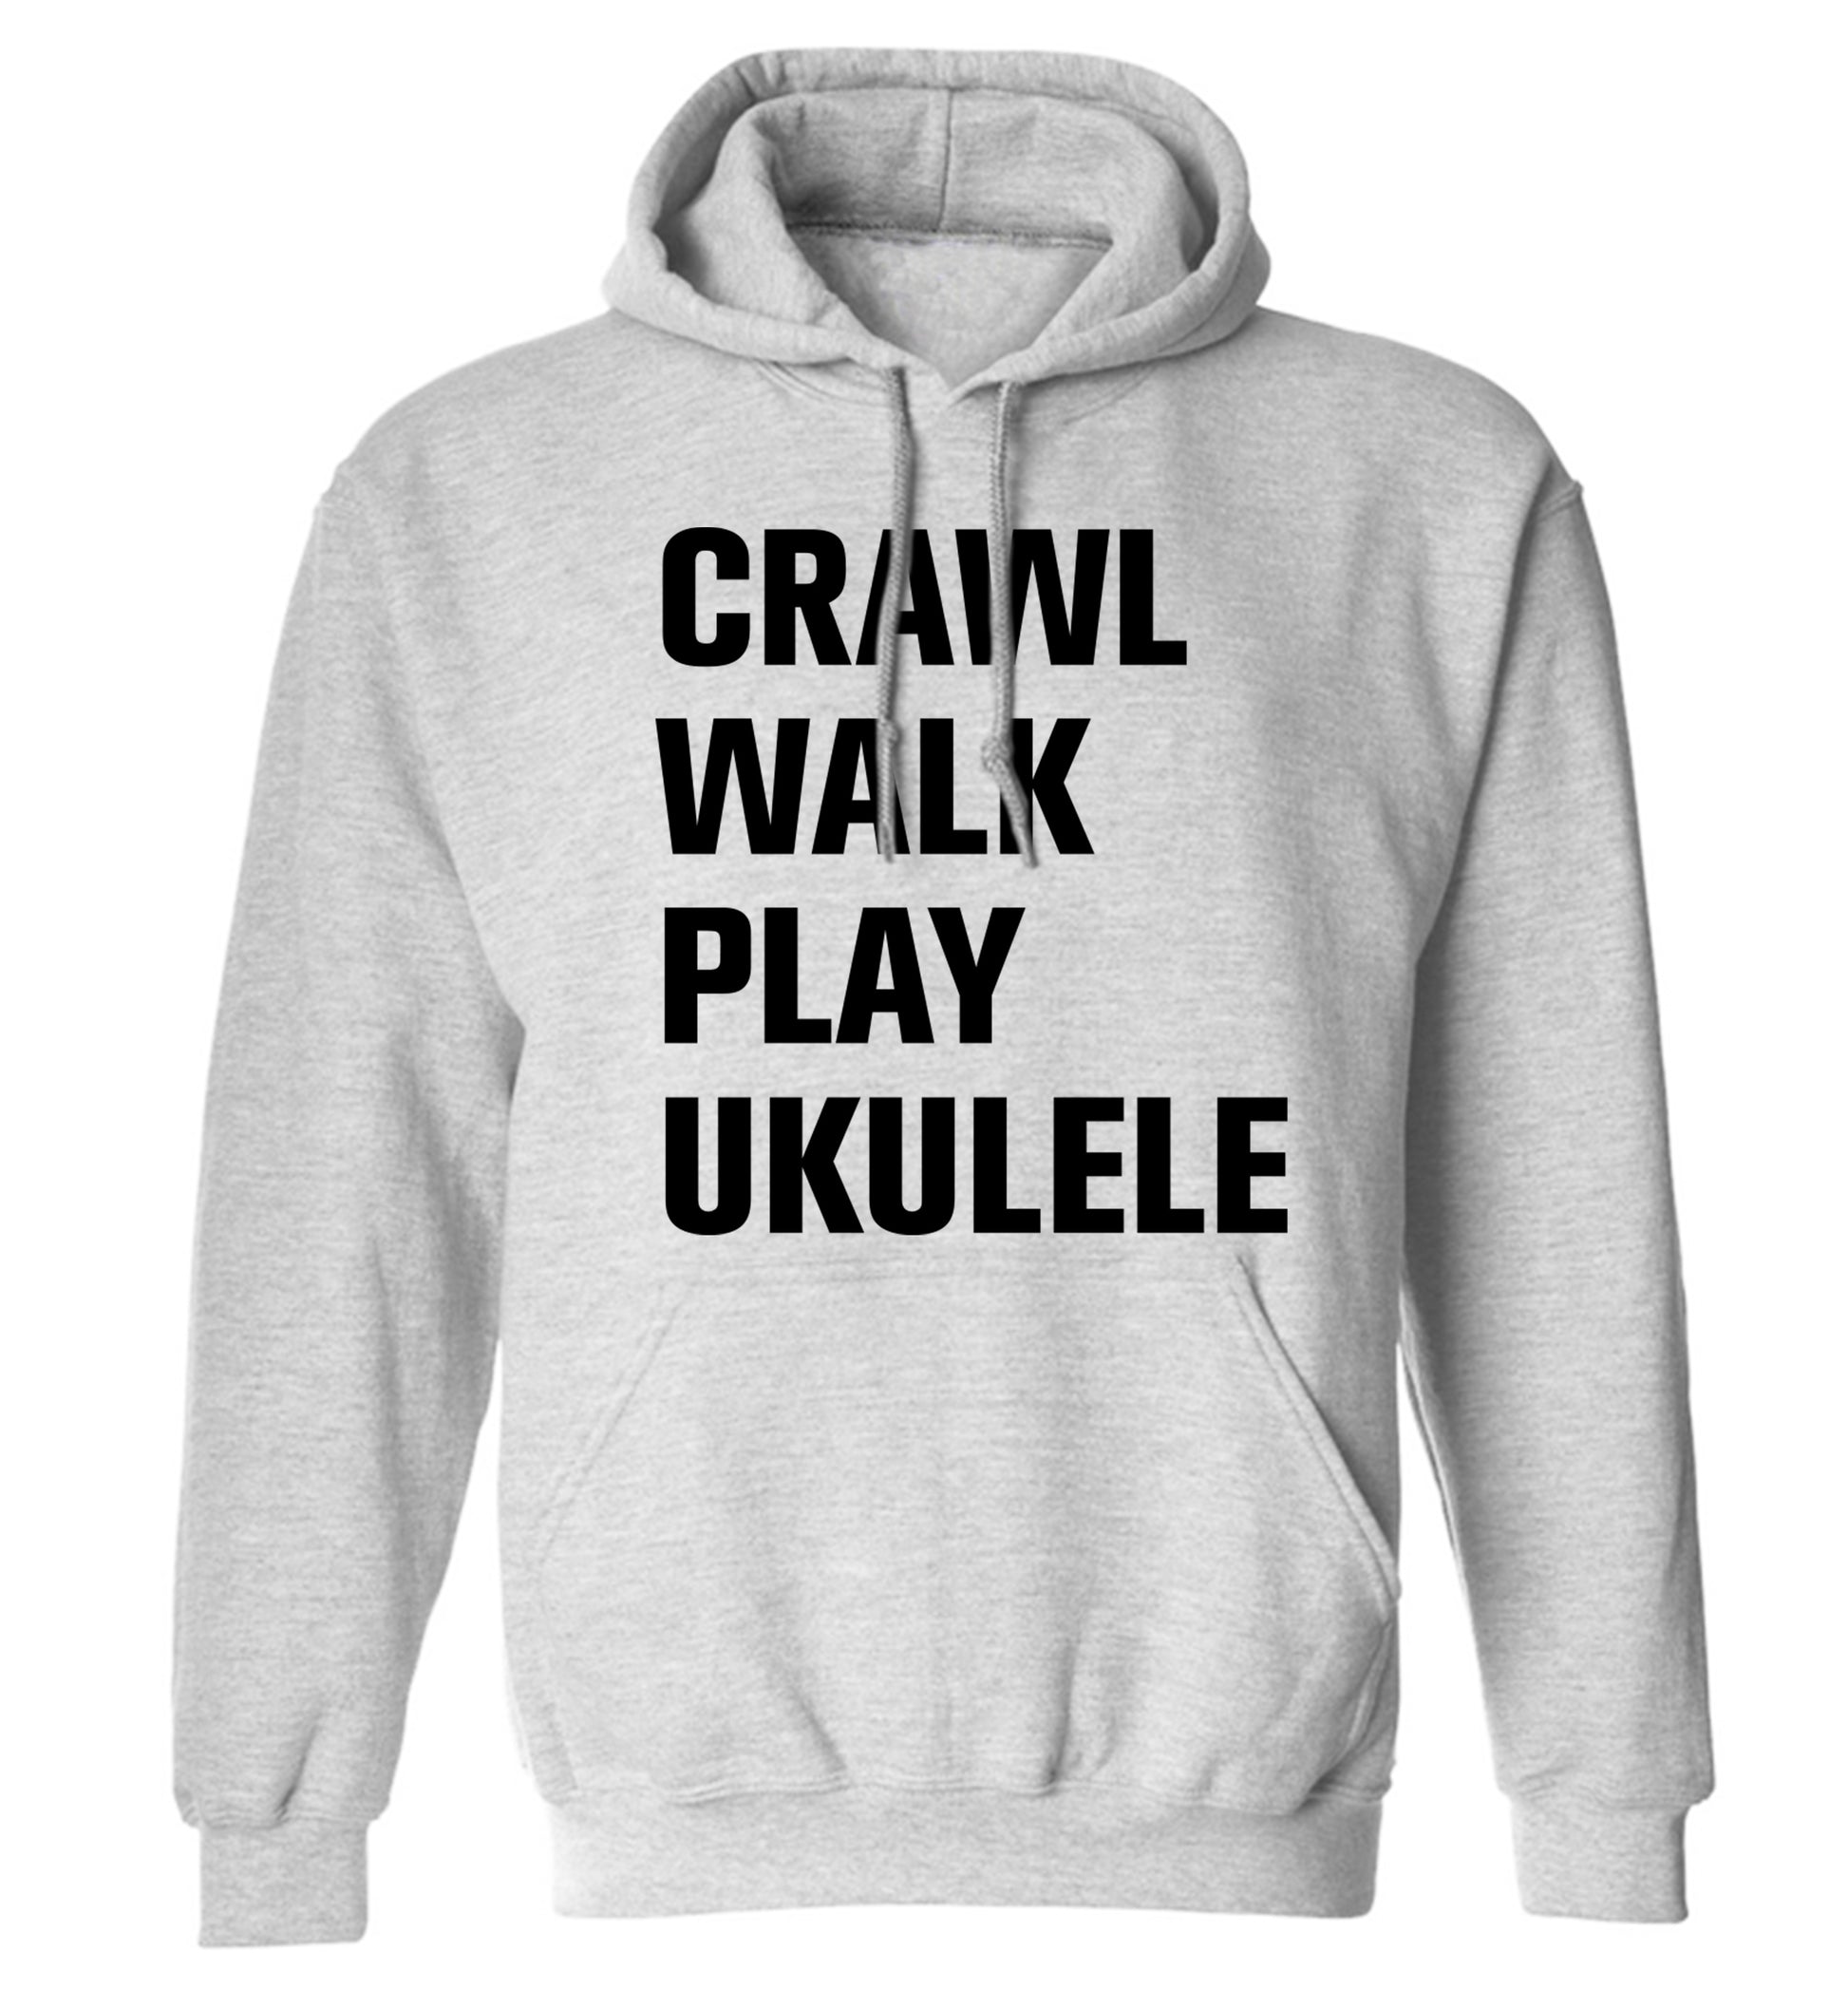 Crawl walk play ukulele adults unisex grey hoodie 2XL